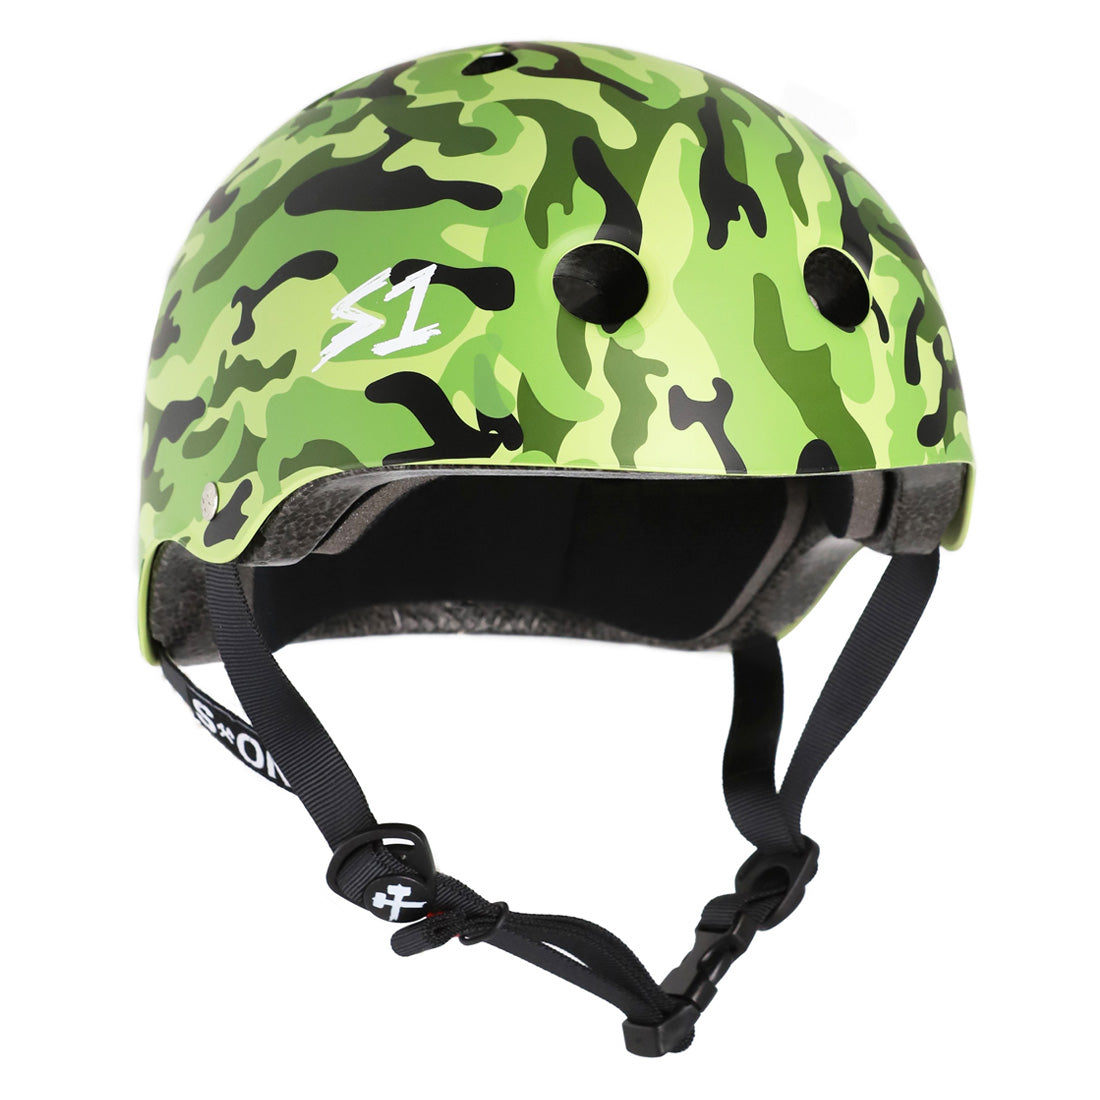 S-One Lifer Helmet - Camo Green Matte Helmets